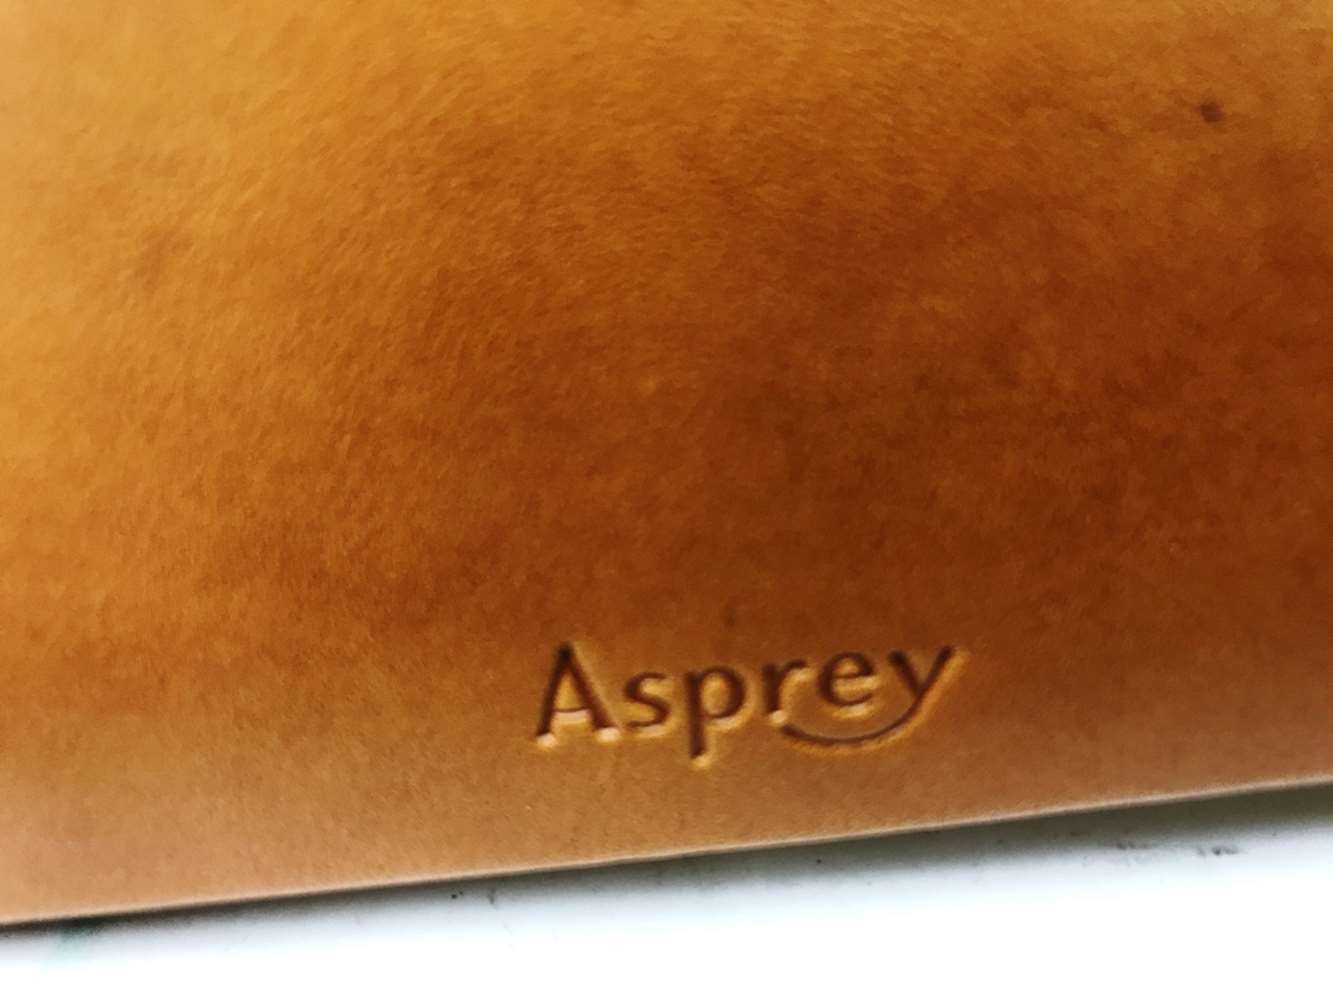 Asprey & Co - New Tan Leather Photo Album-Large 13 x 11 Inch - Image 2 of 5